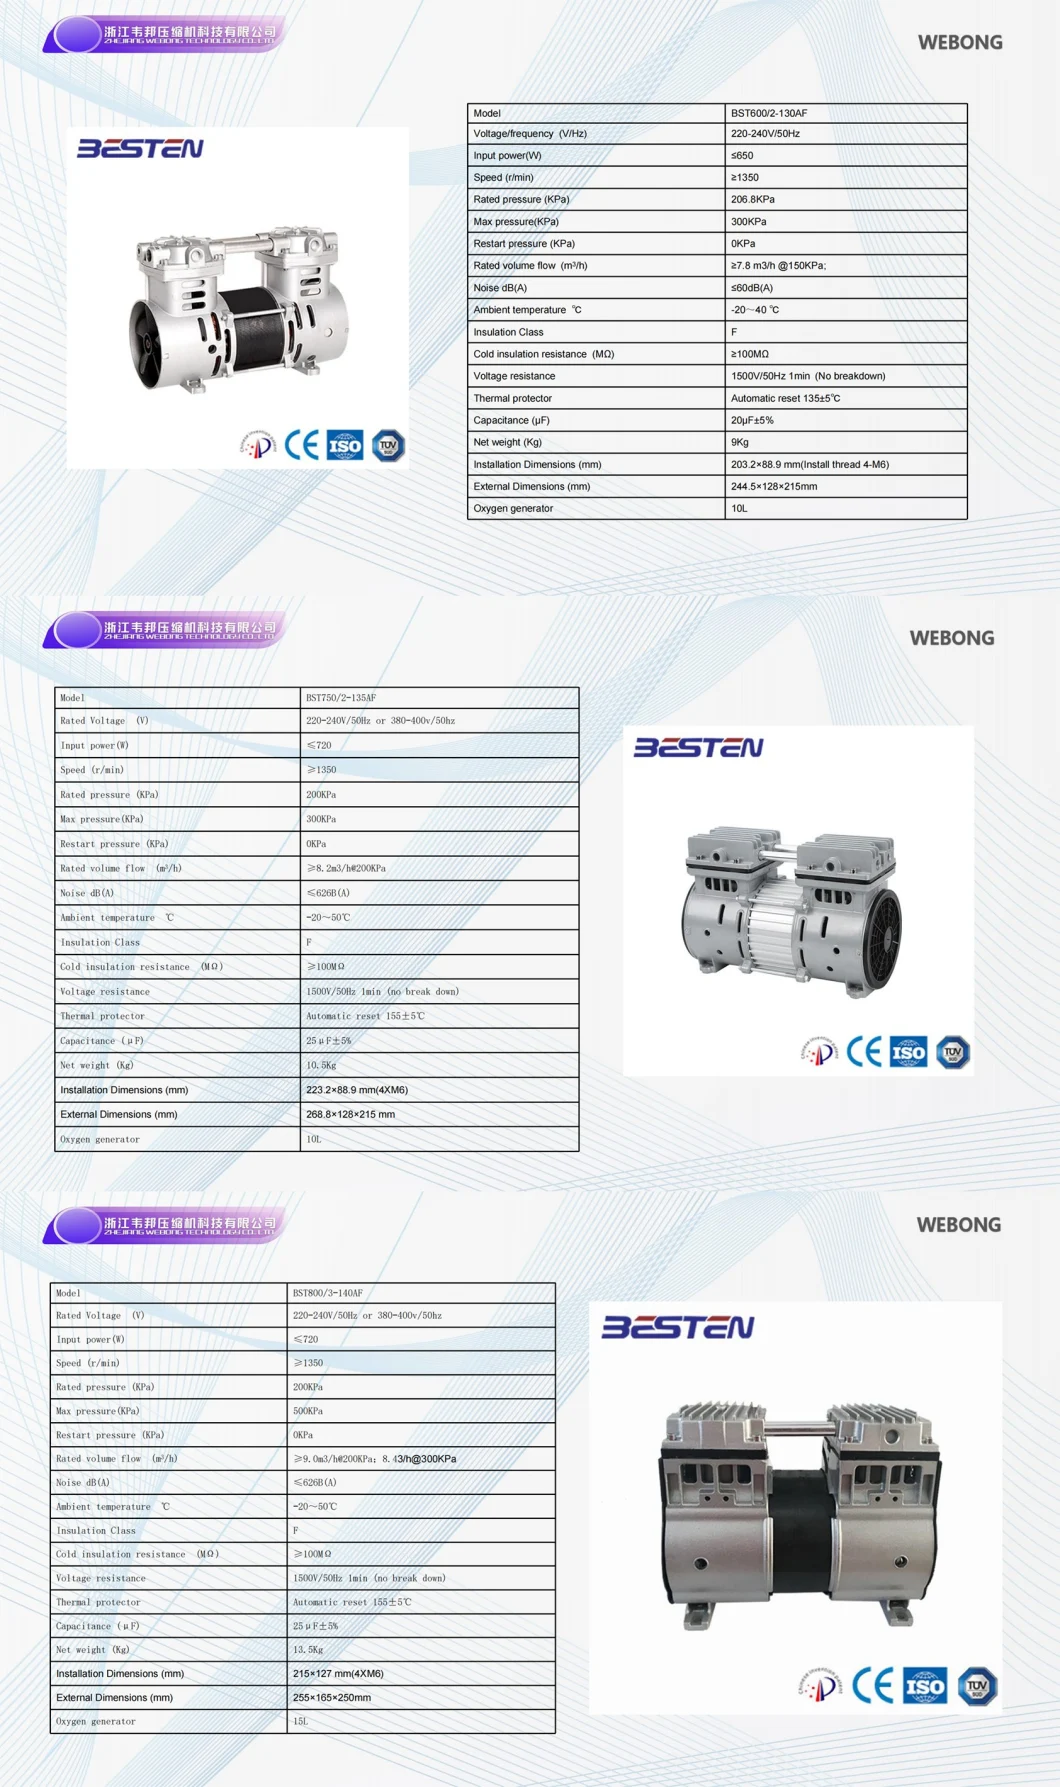 Besten Silent Oil-Free Gas Booster Oxygen Compressor Nitrogen Booster 750W 1HP 2HP 3HP 4HP 12bar AC380V / 50Hz 220V-240V / 60Hz